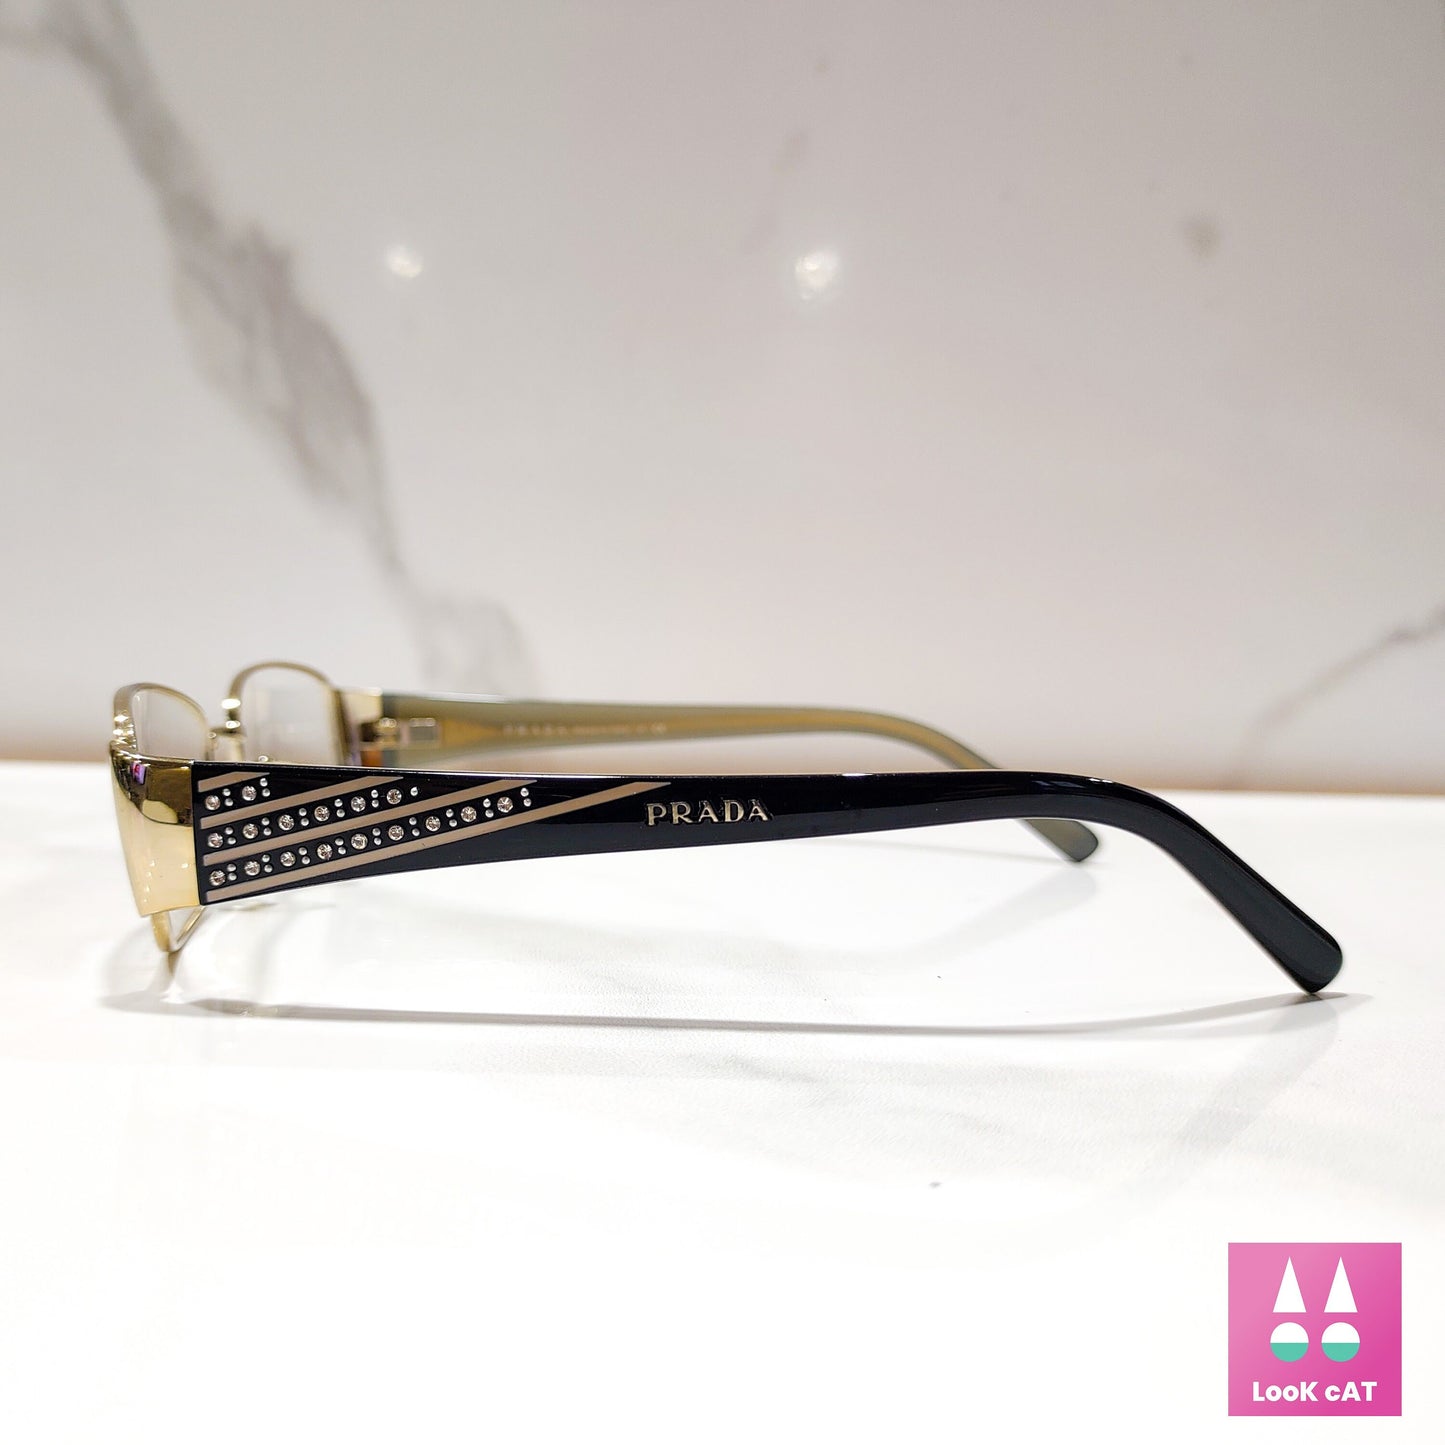 Prada VPR 68L eyeframe occhiali da vista lunetta brille y2k sfumature senza montatura